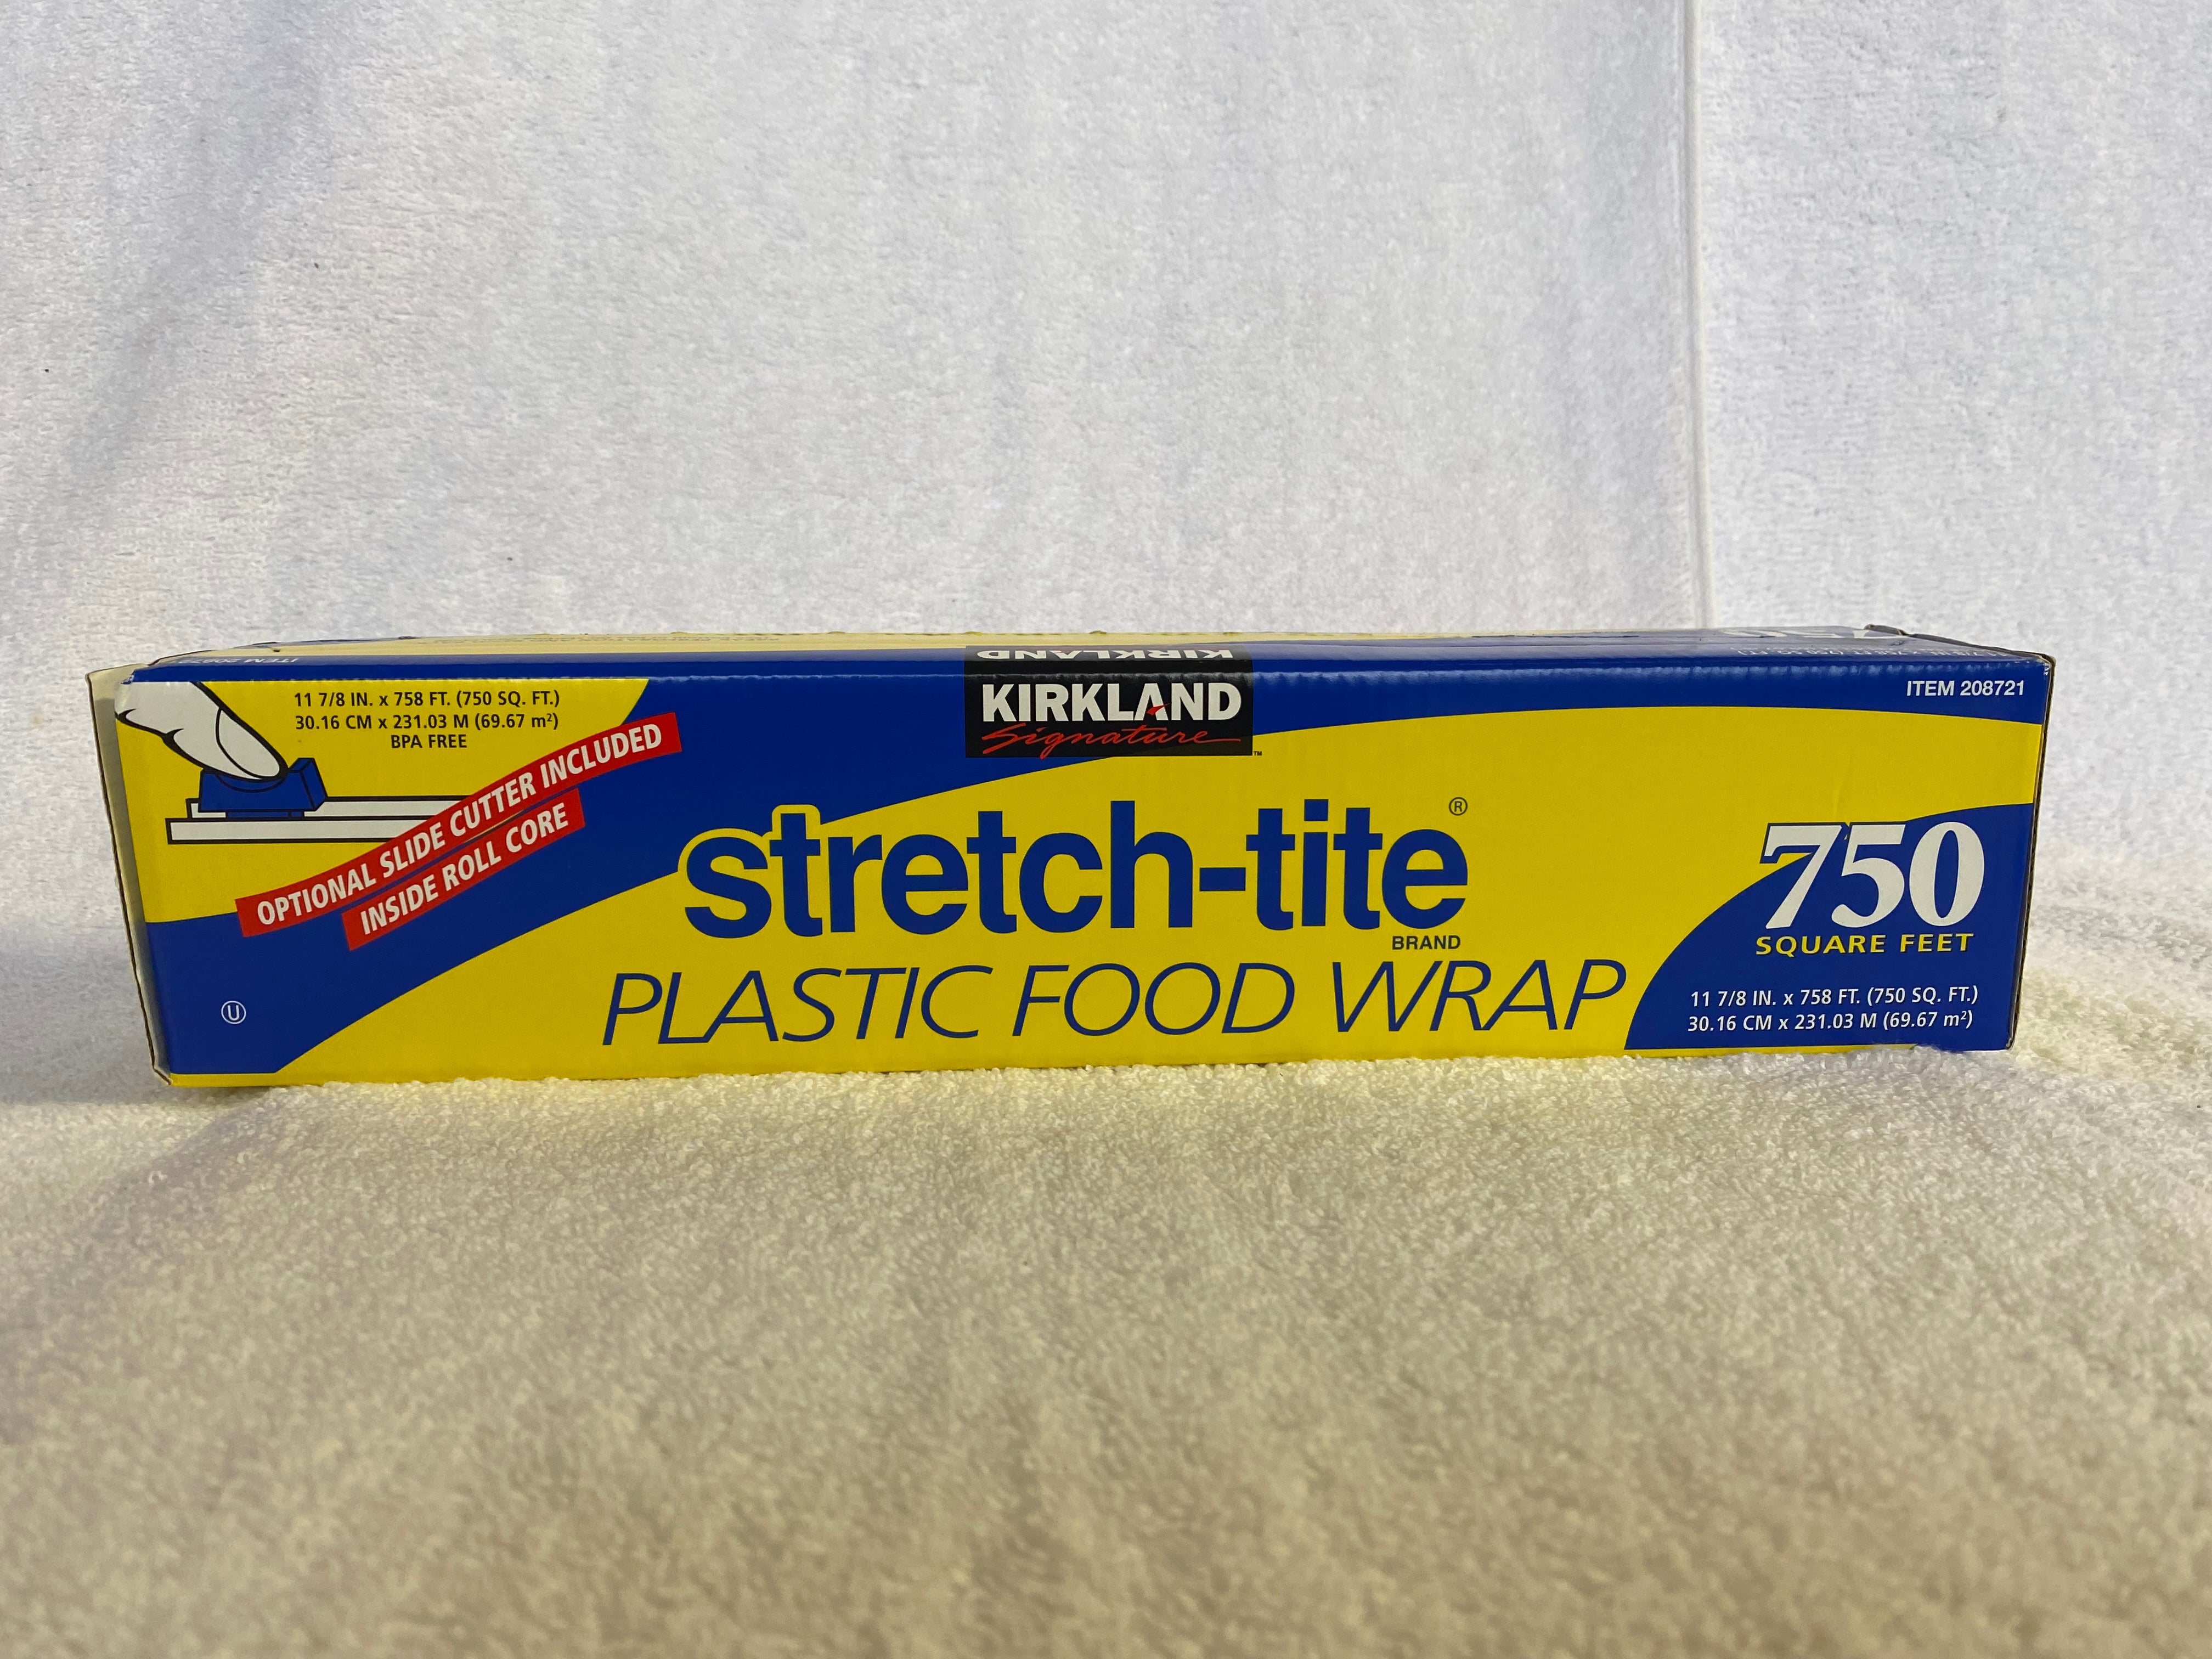 Kirkland Signature Stretch Tite Plastic Food Wrap 12 in x 3000 ft